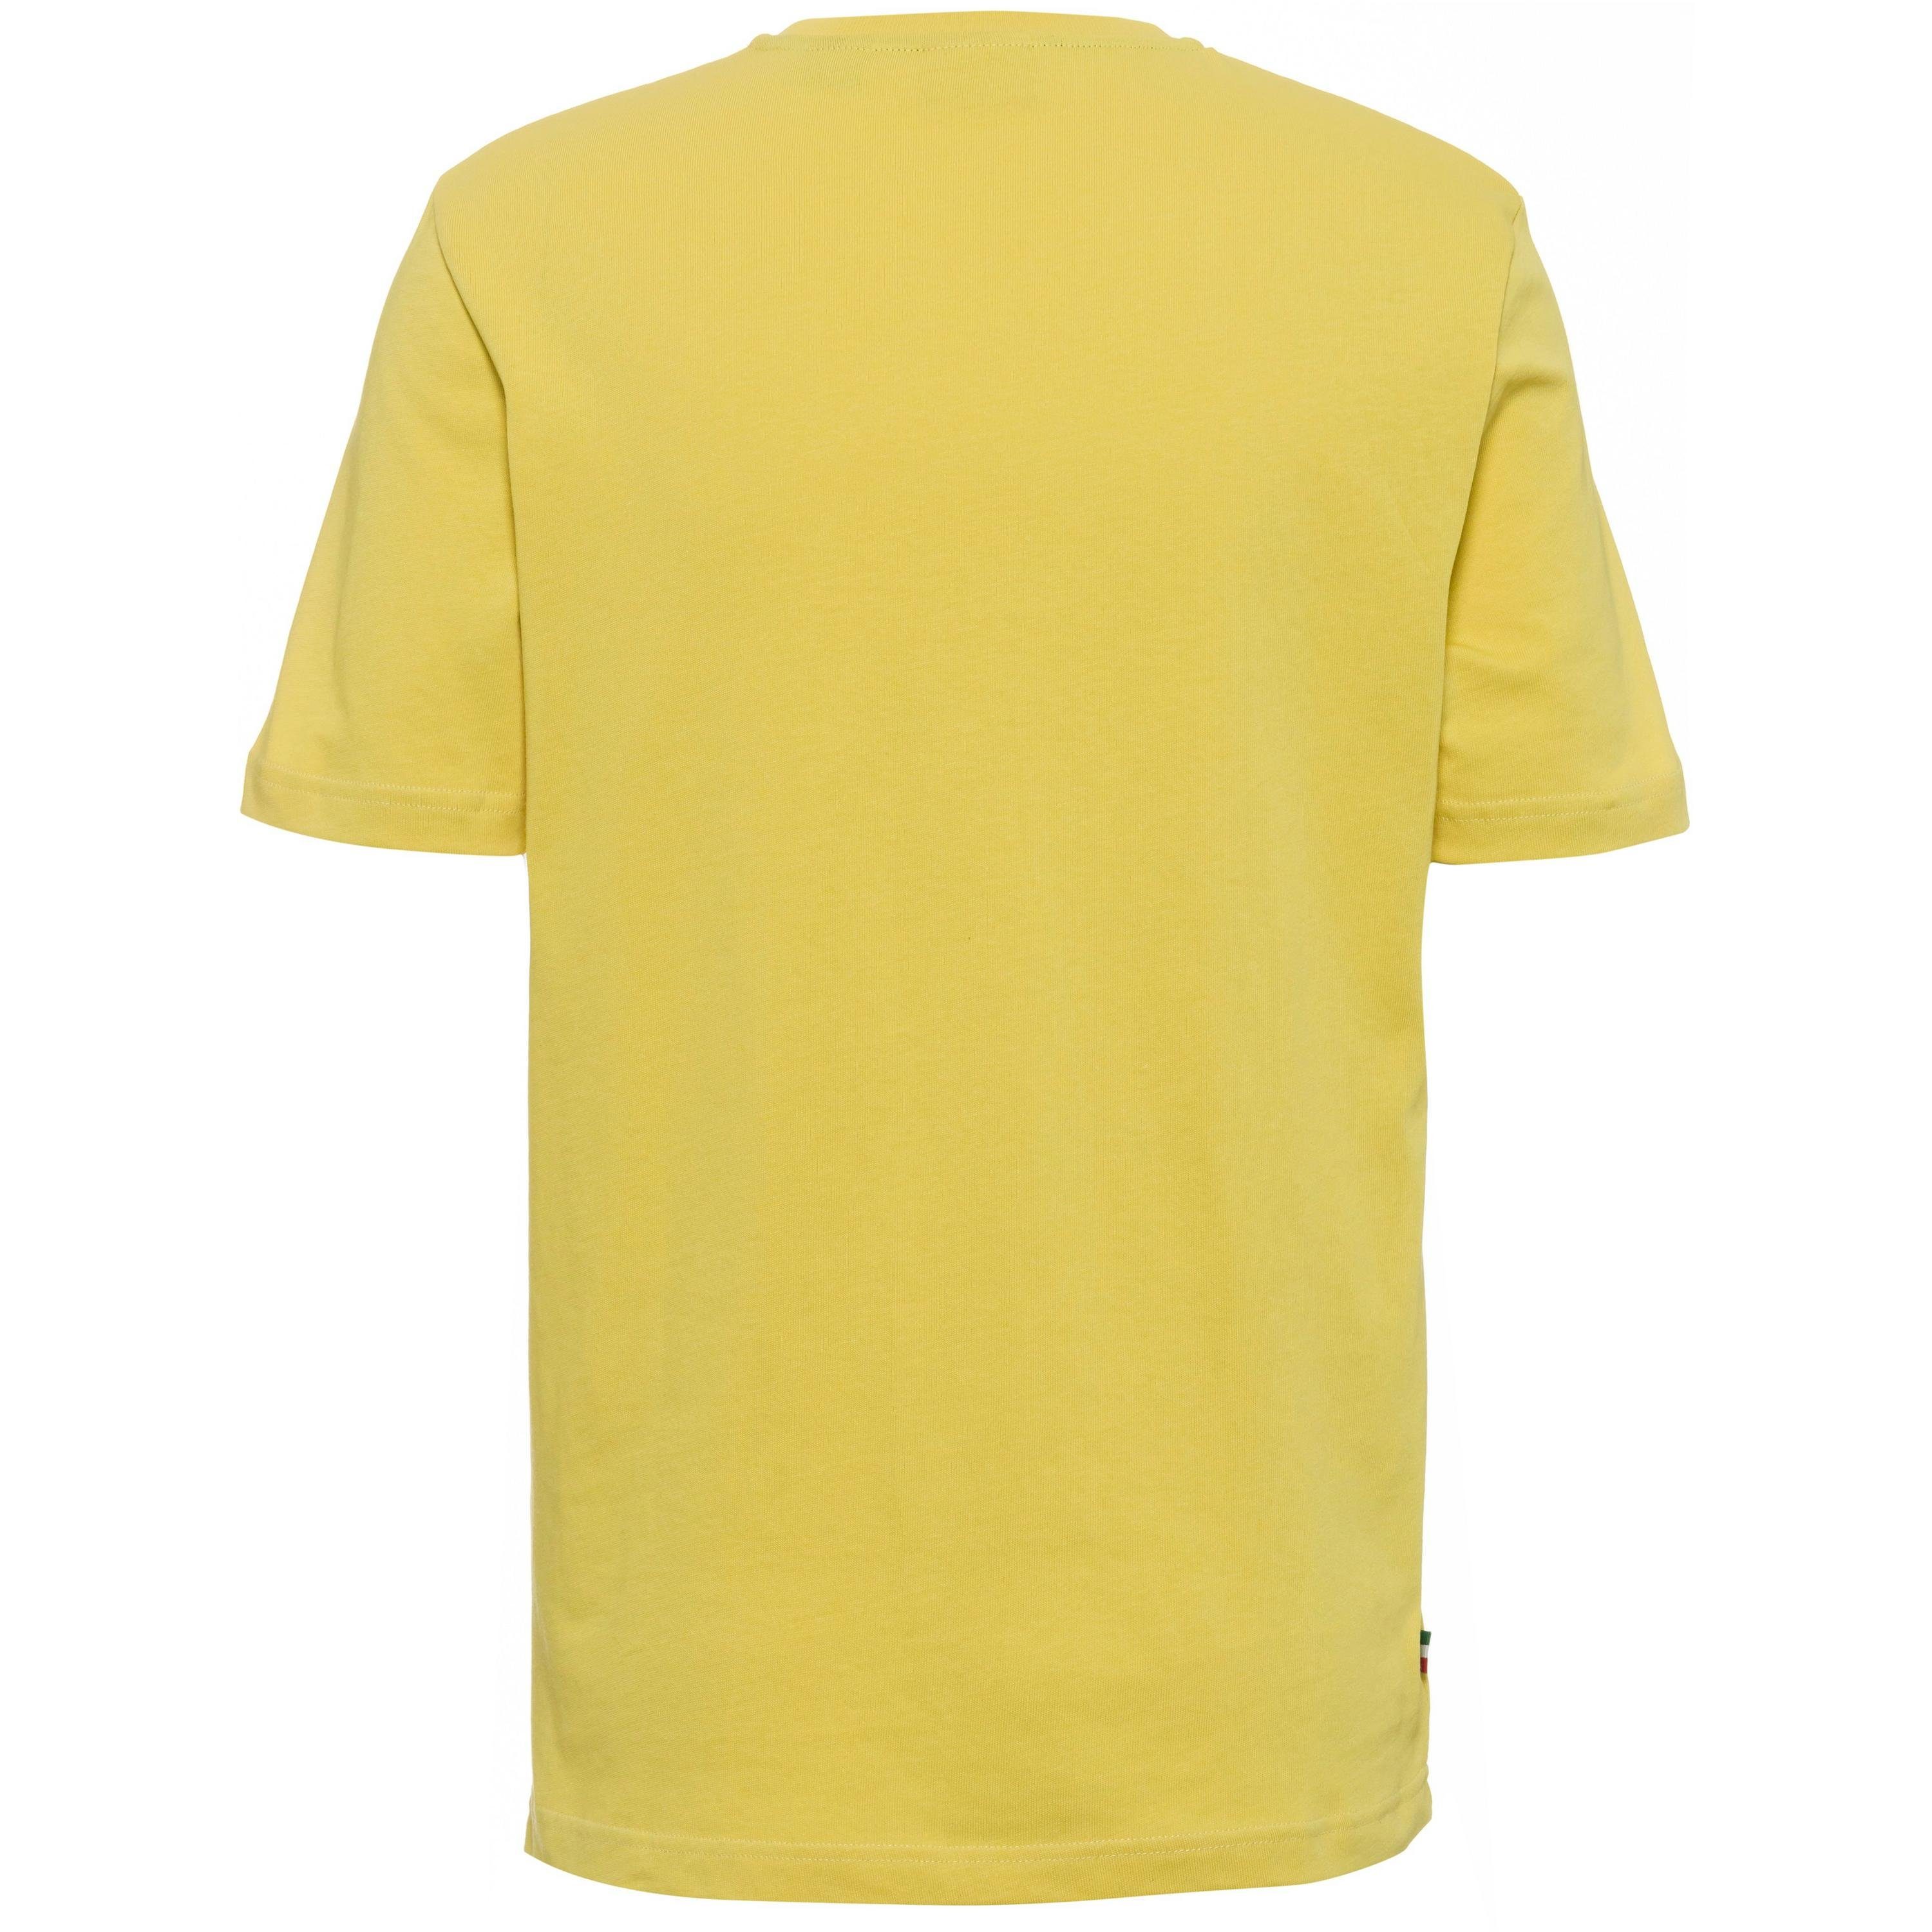 Dolomite yellow GARD karson Print-Shirt